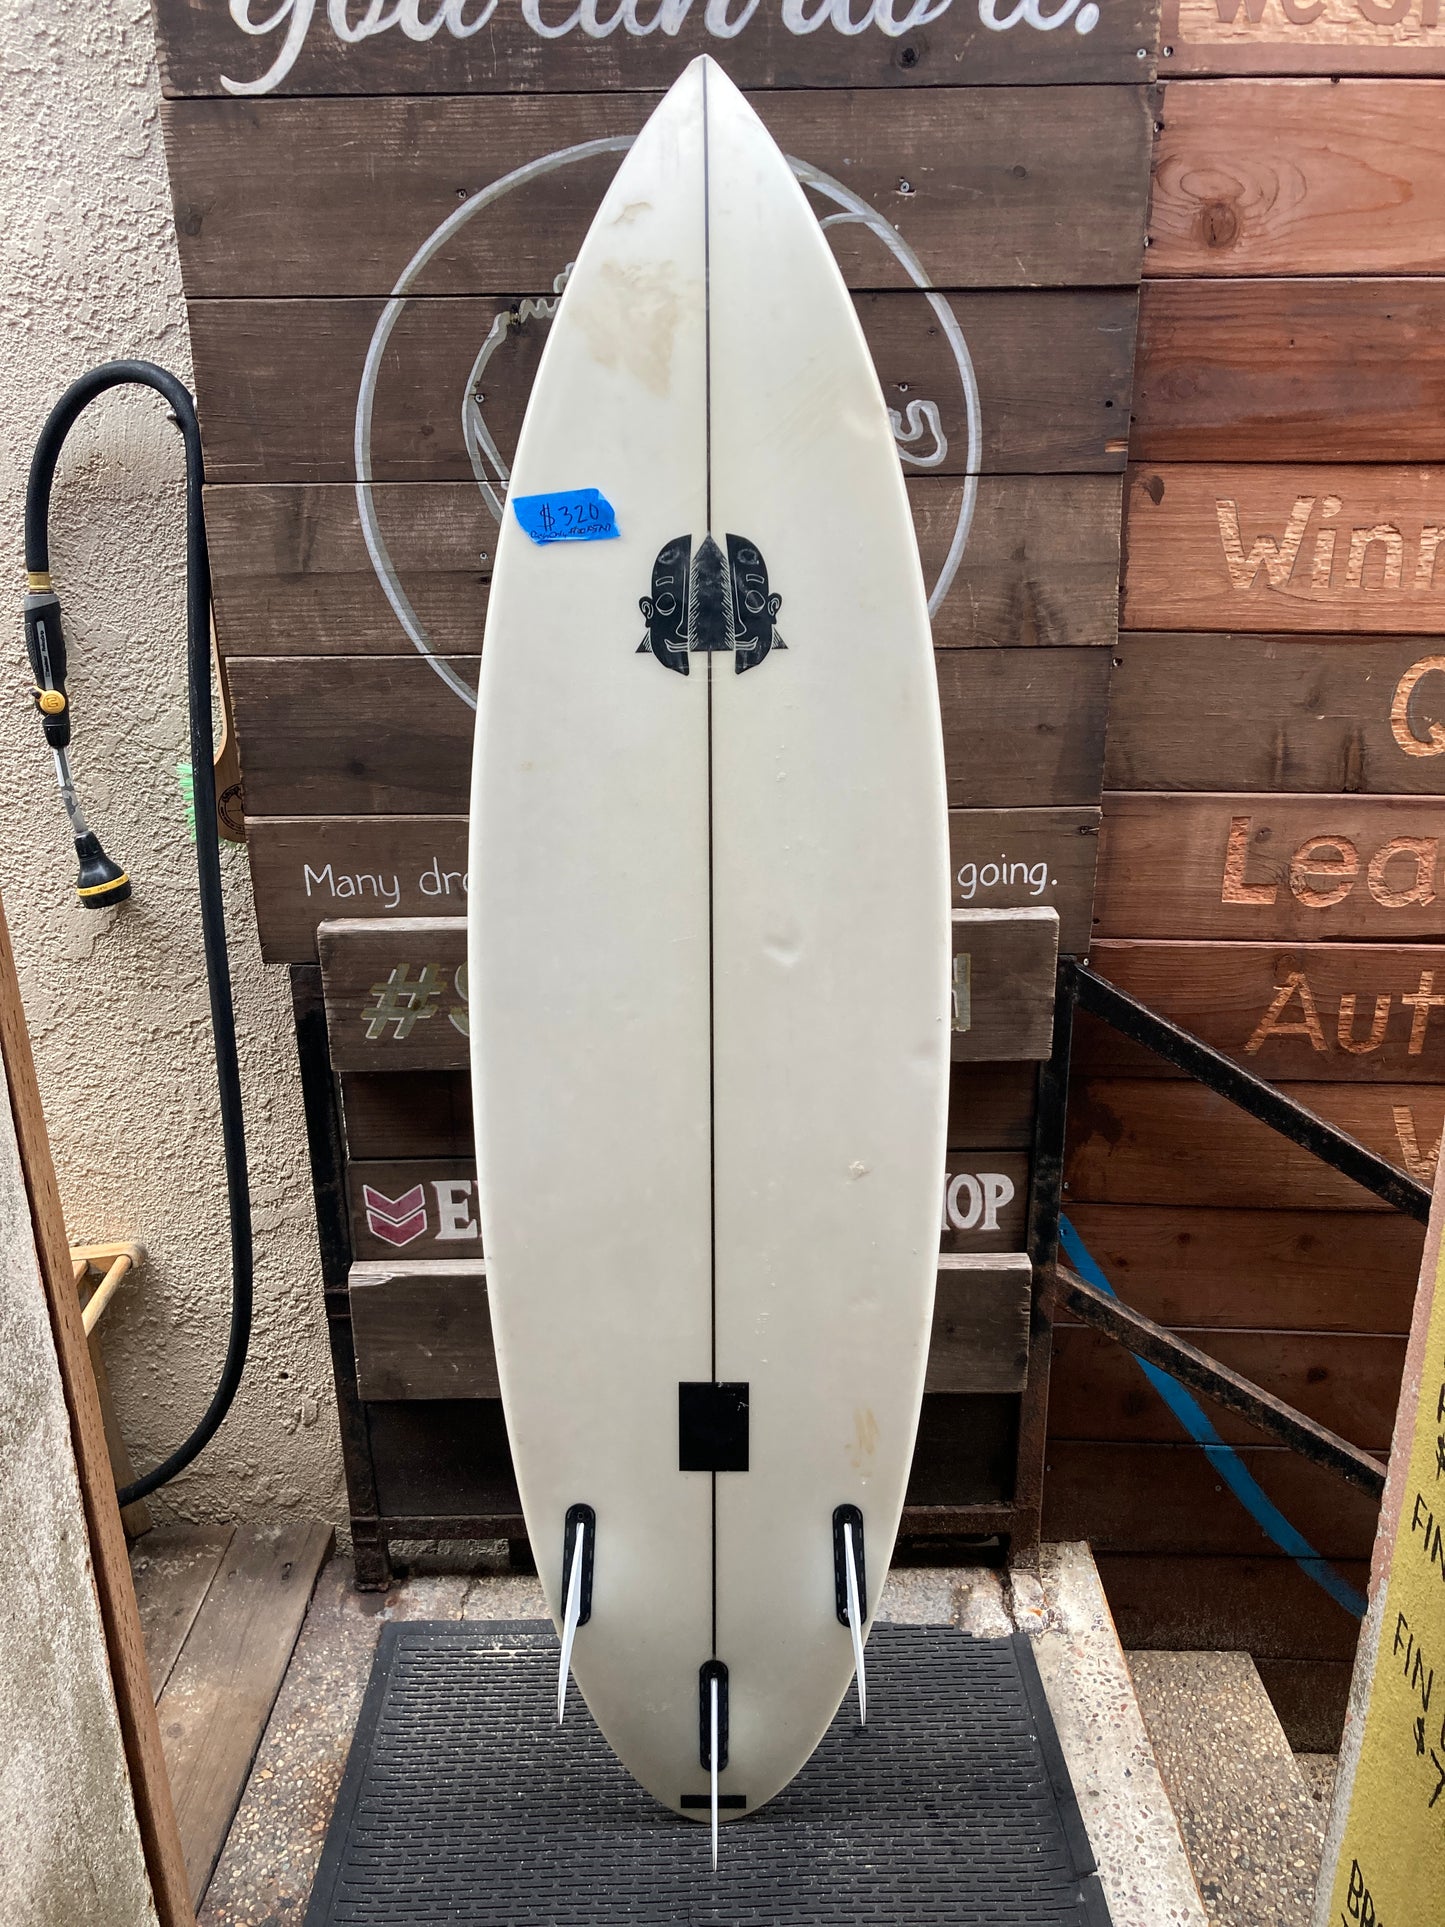 USED: White Thruster Preformance Surfboard